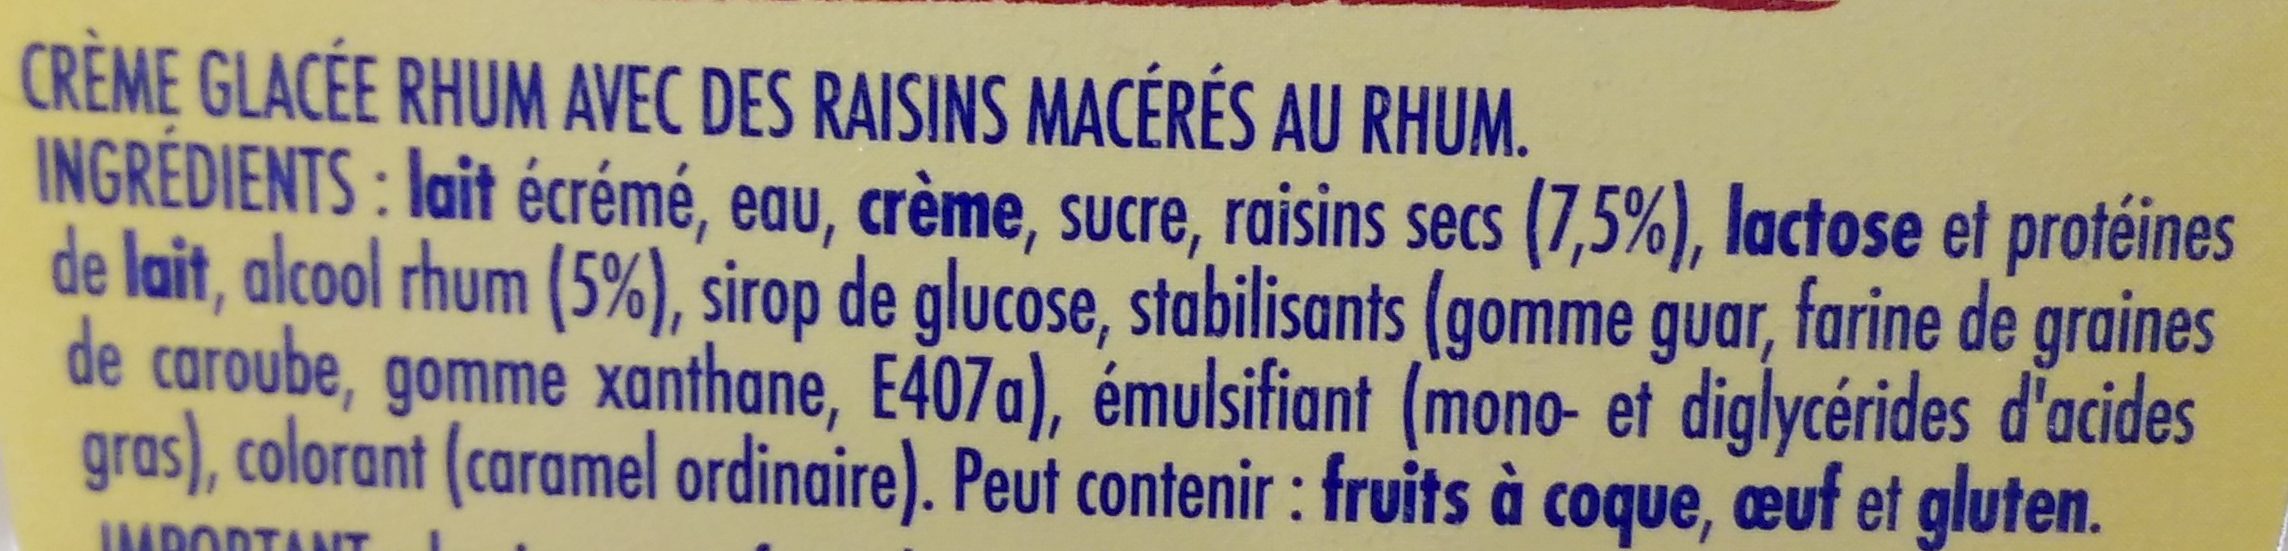 Rhum raisins - Ingredients - fr